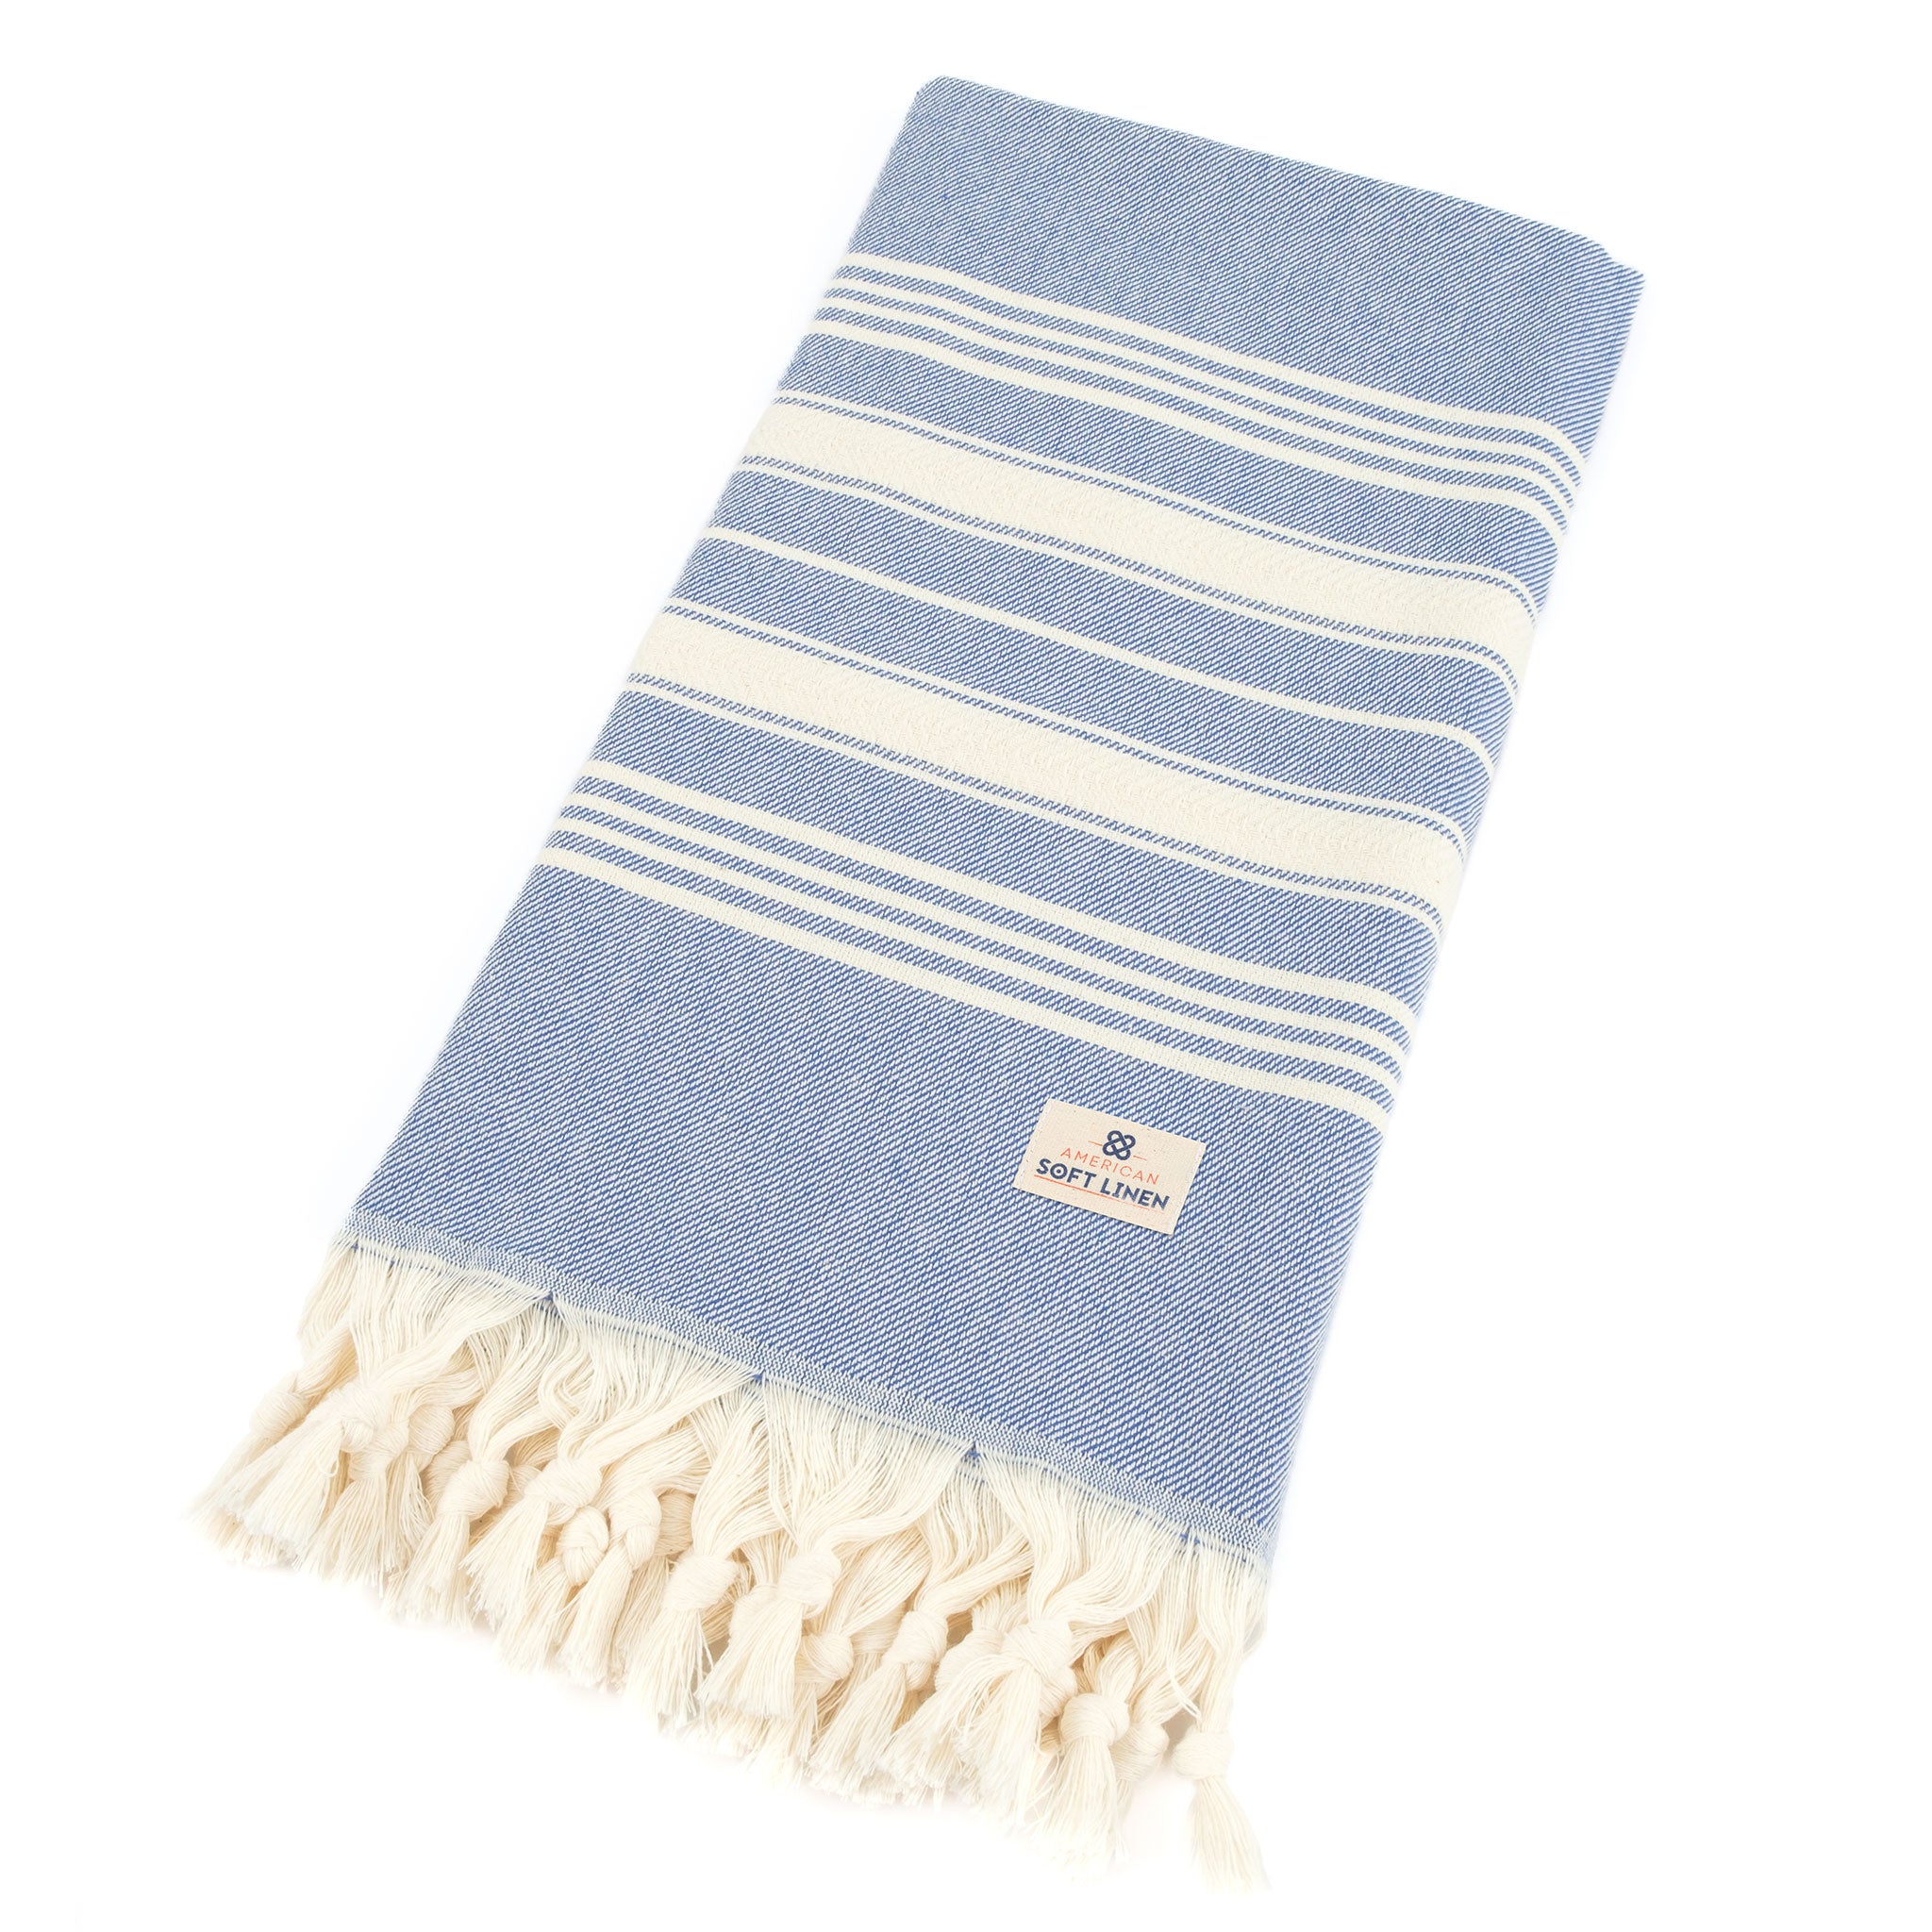 American Soft Linen - 100% Cotton Turkish Peshtemal Towels 40x70 Inches - Blue - 5